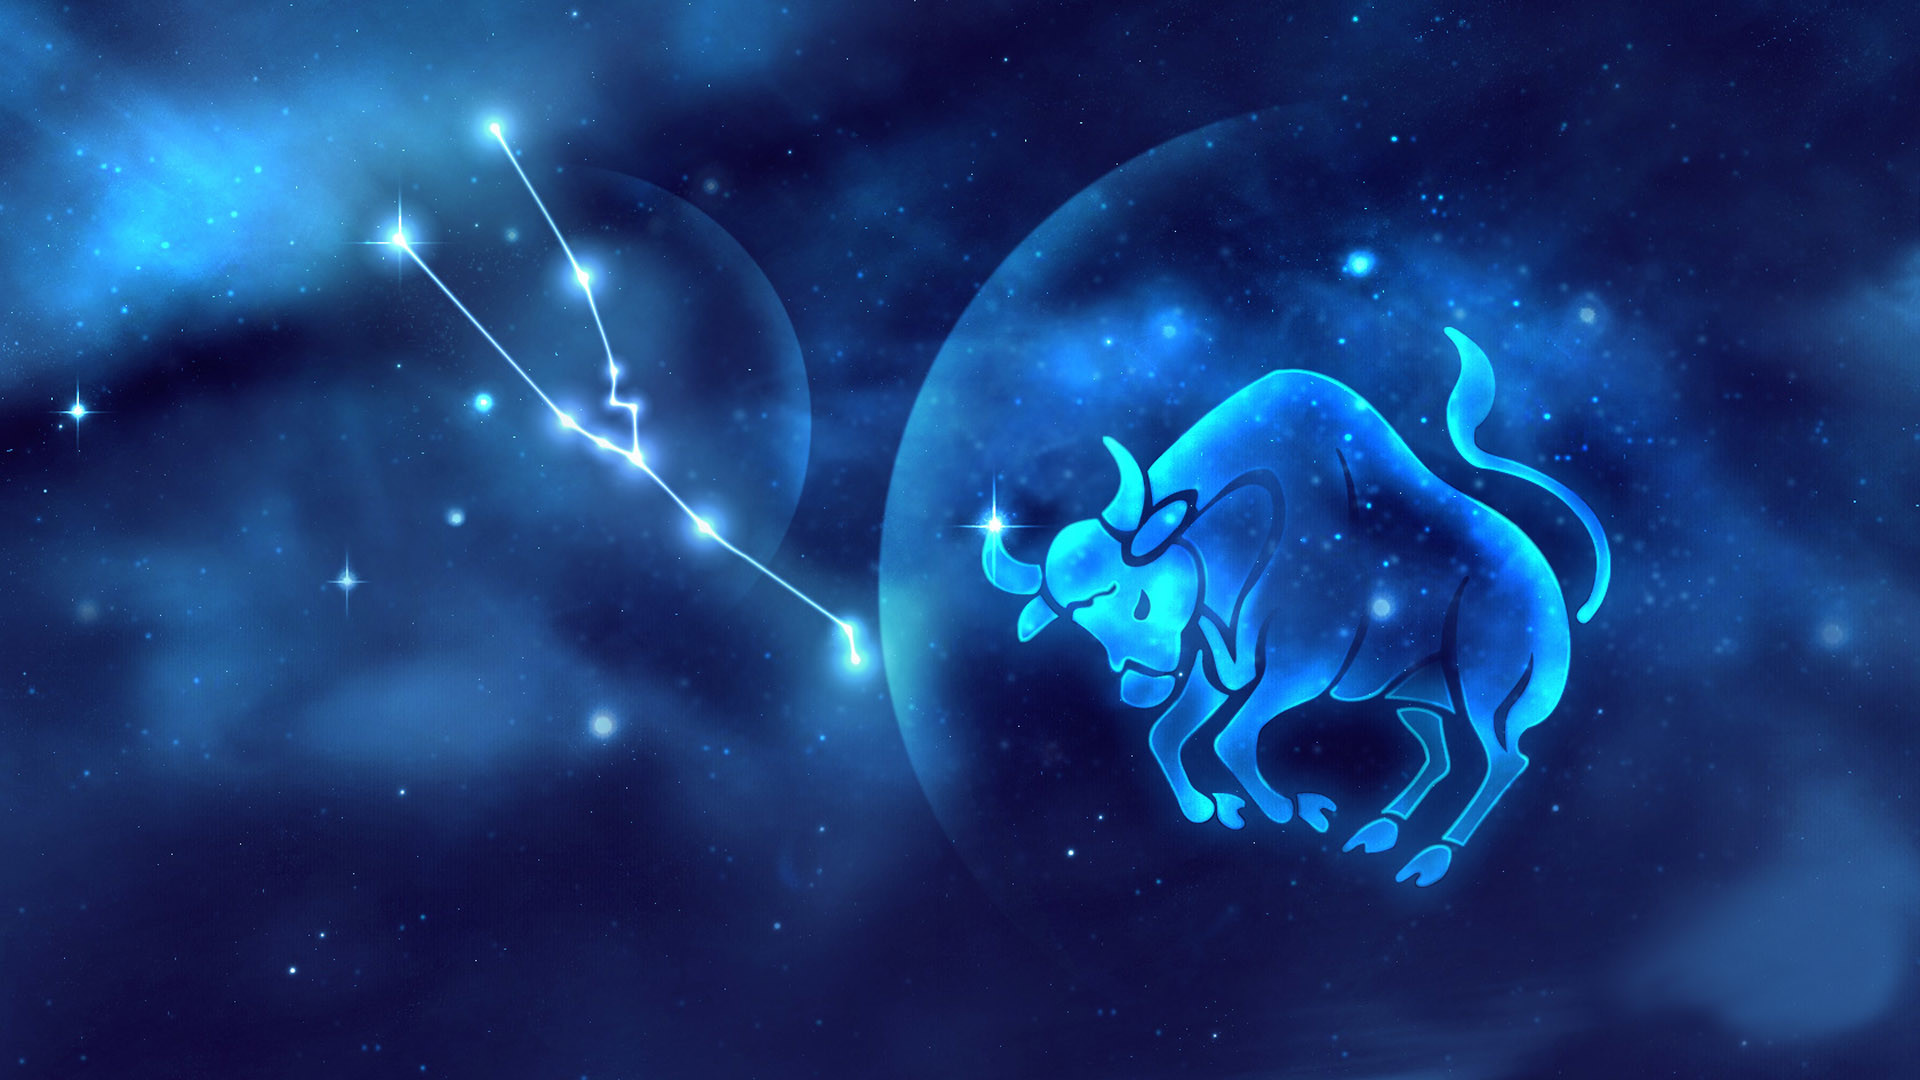 O que é o sinal da lua de Taurus?